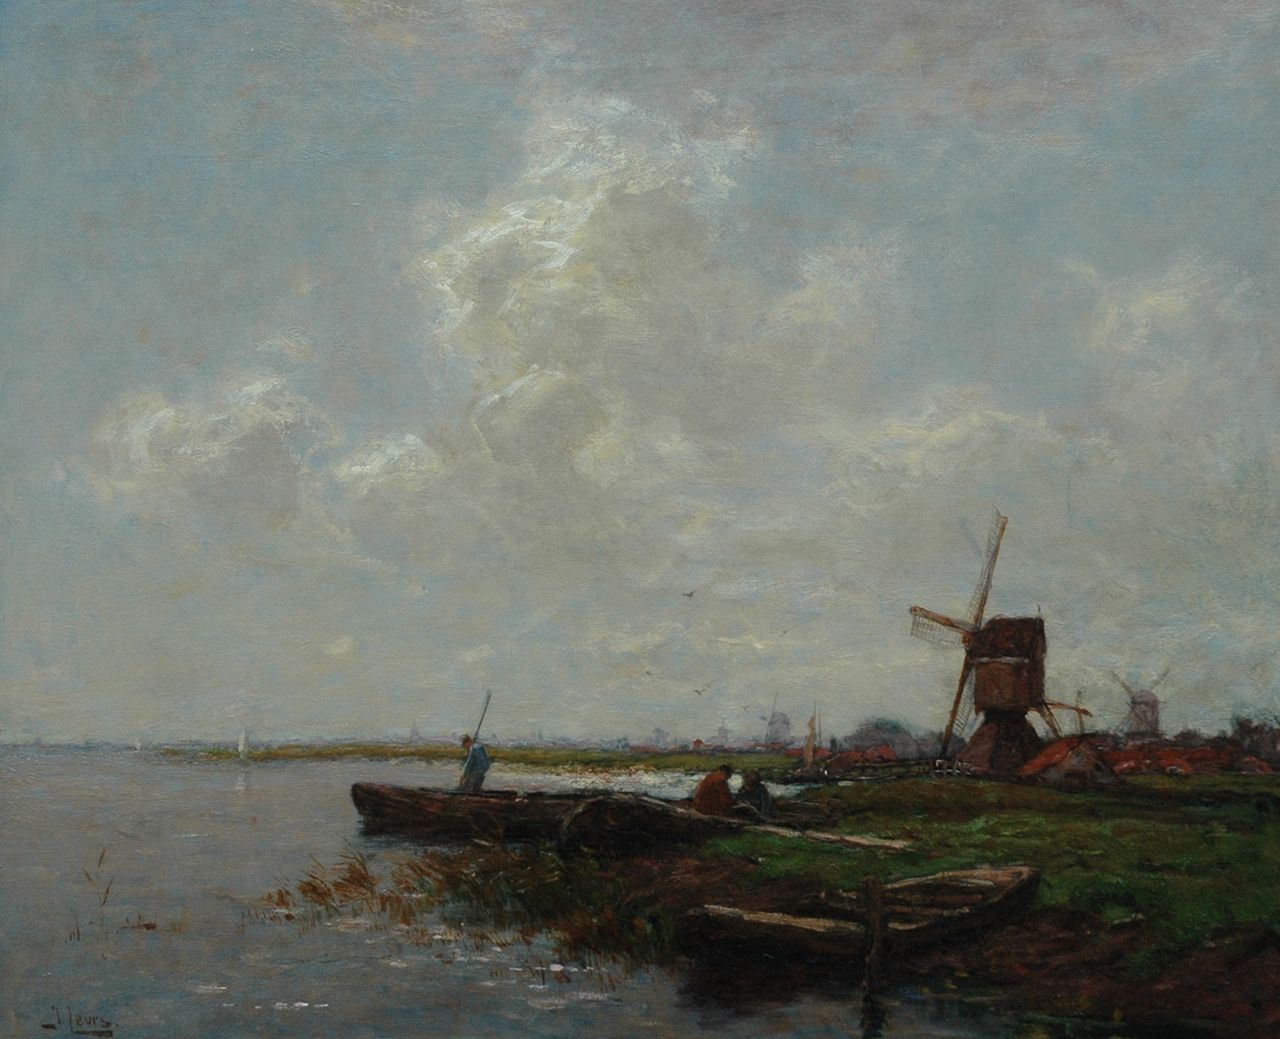 Leurs J.K.   | Johannes Karel Leurs, Polder landscape with boats and a windmill, oil on canvas 65.6 x 80.4 cm, signed l.l.